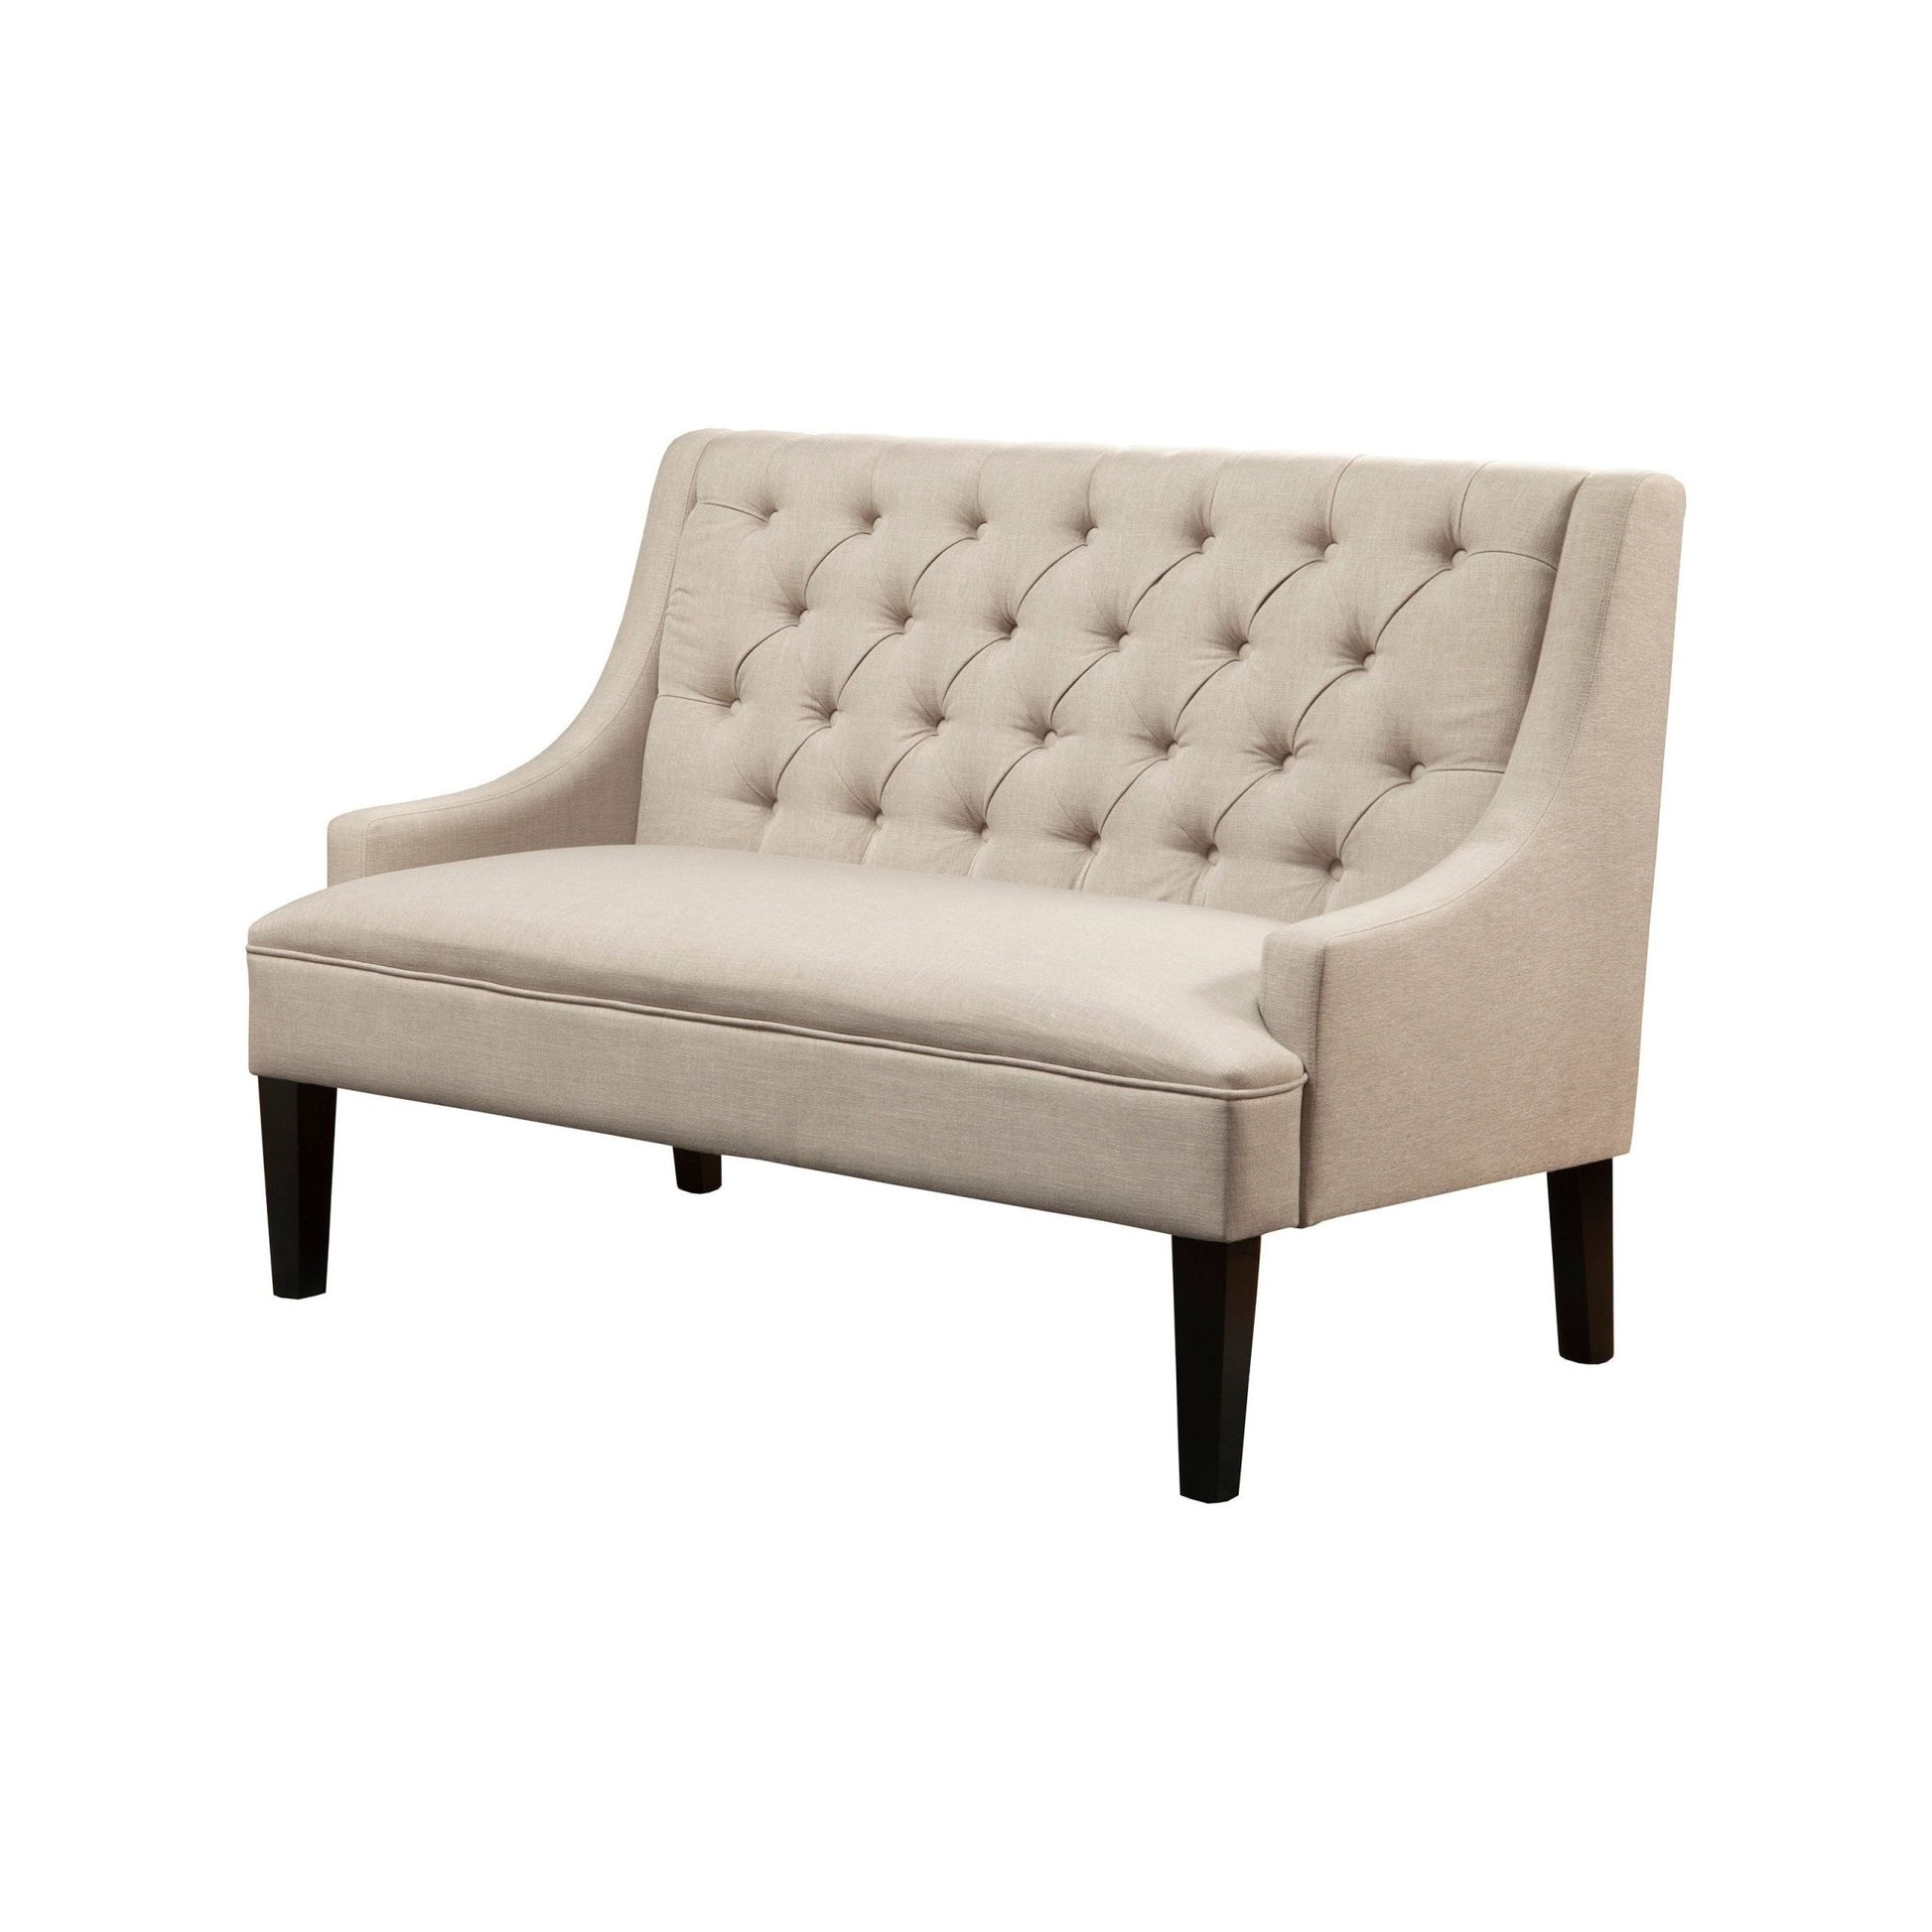 Posh Upholstered Bench, Light Grey/Brown - Alpine Furniture